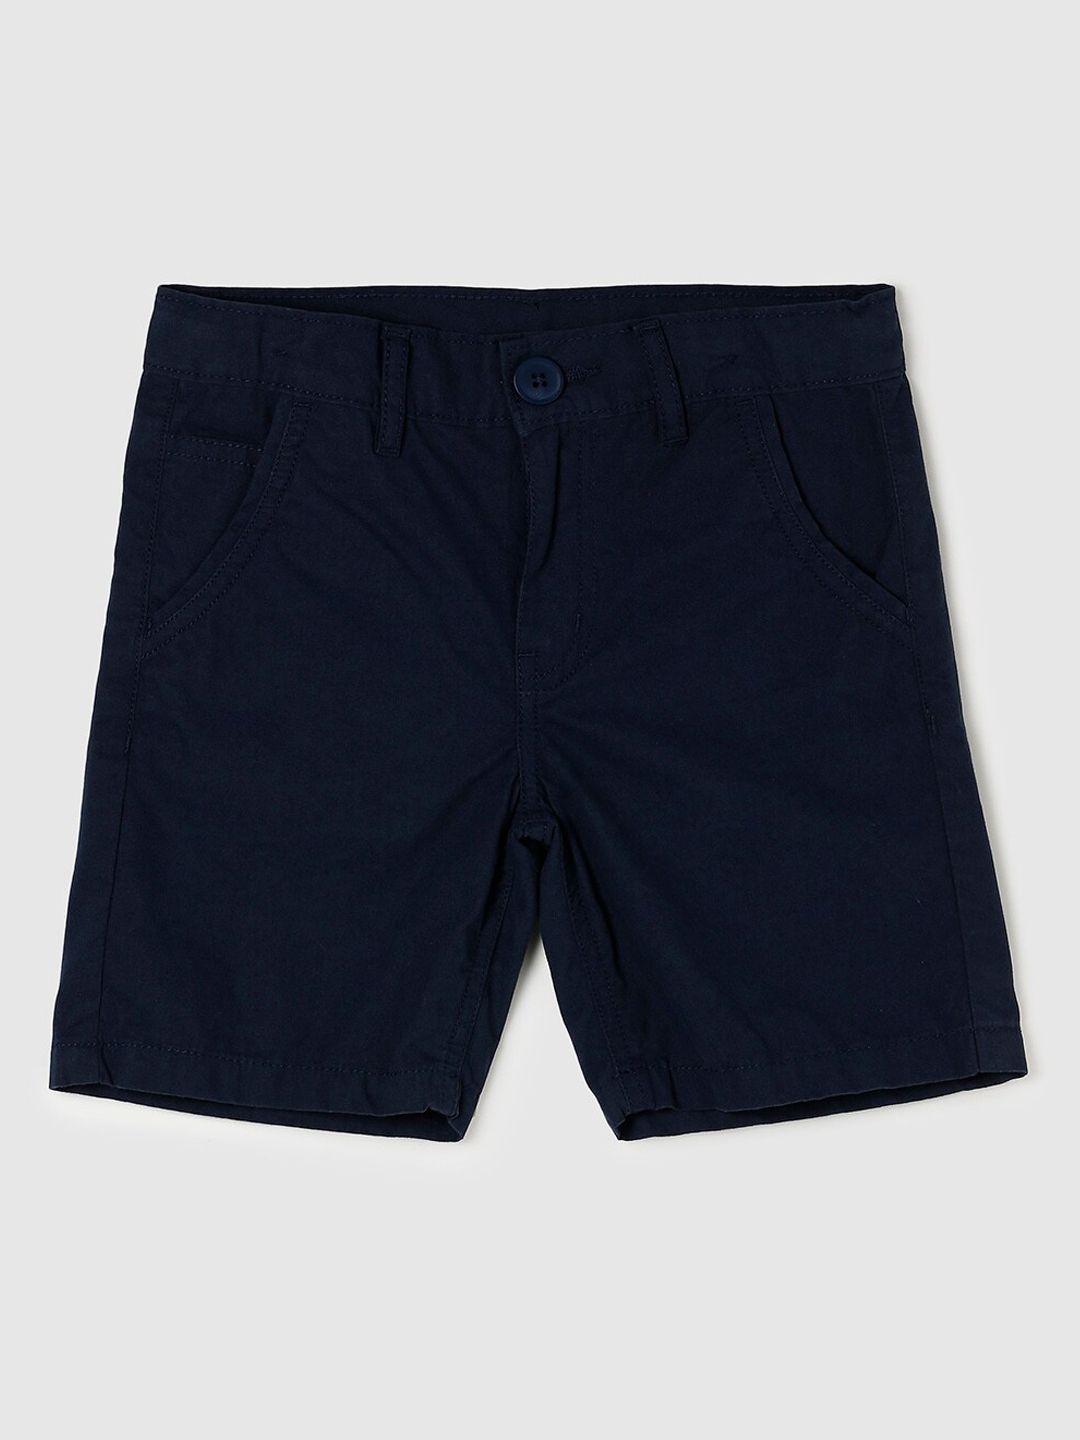 max boys navy blue shorts